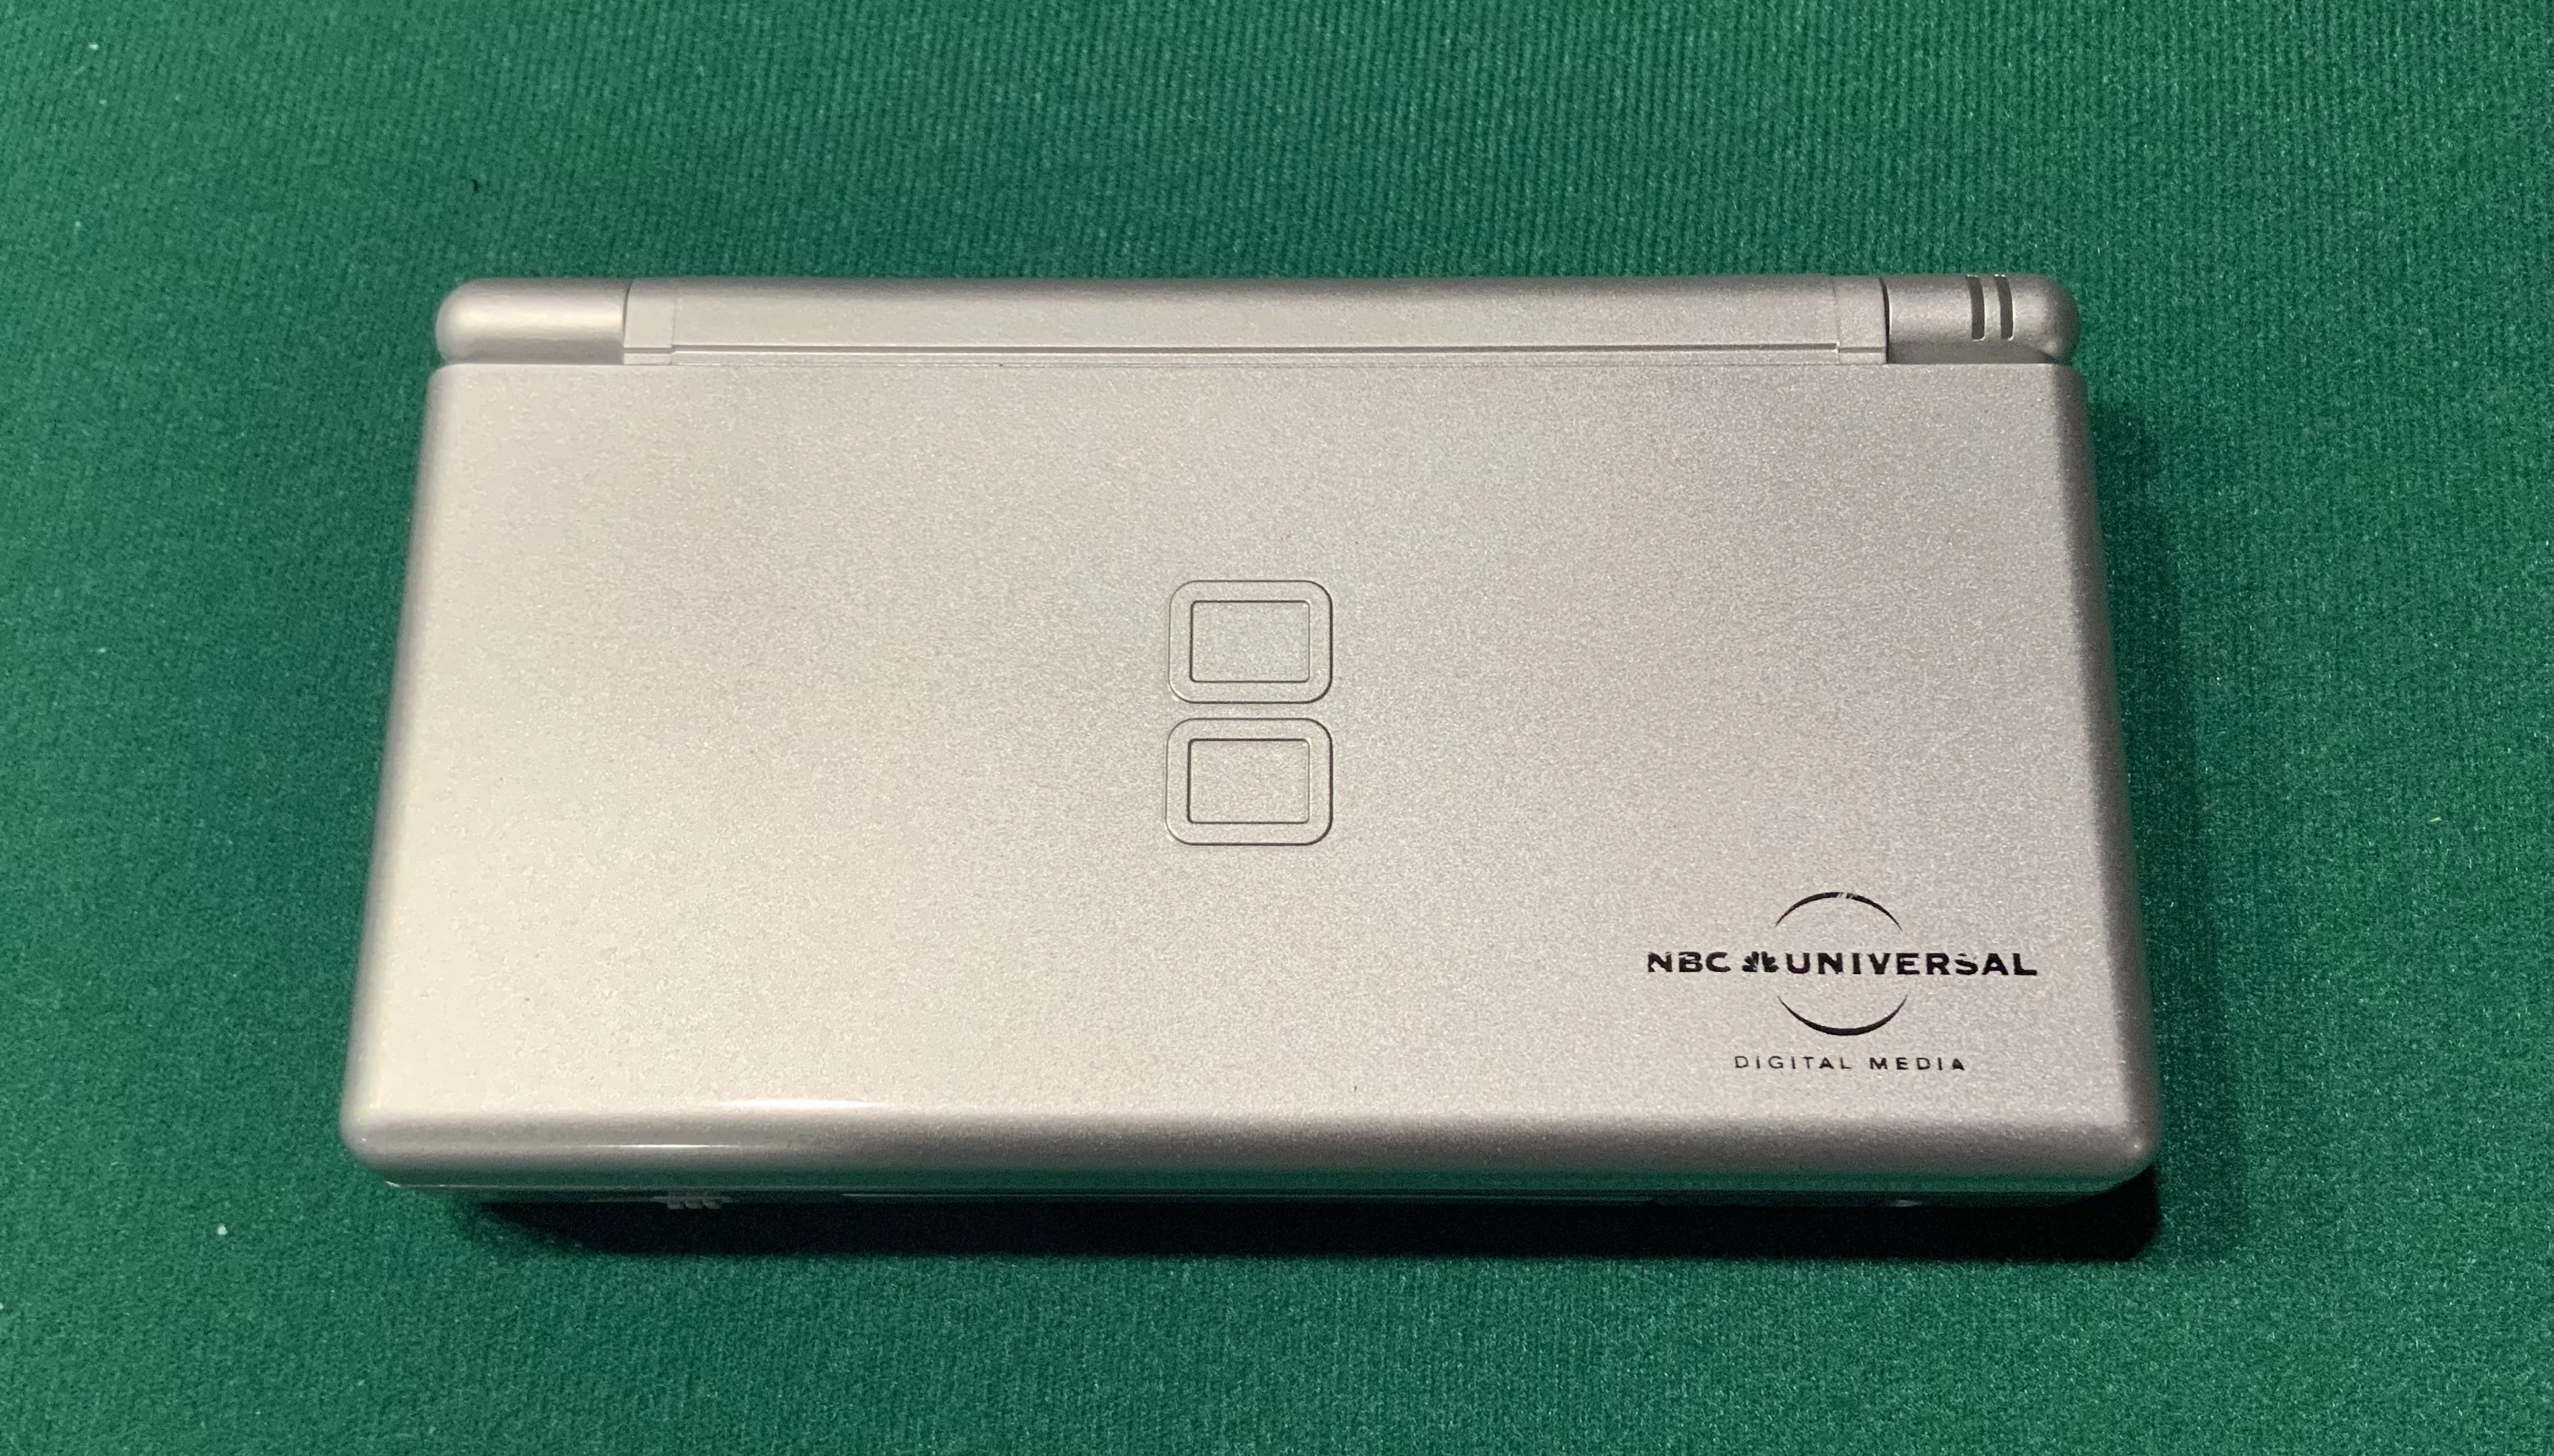  Nintendo DS Lite NBC Universal Digital Media Console